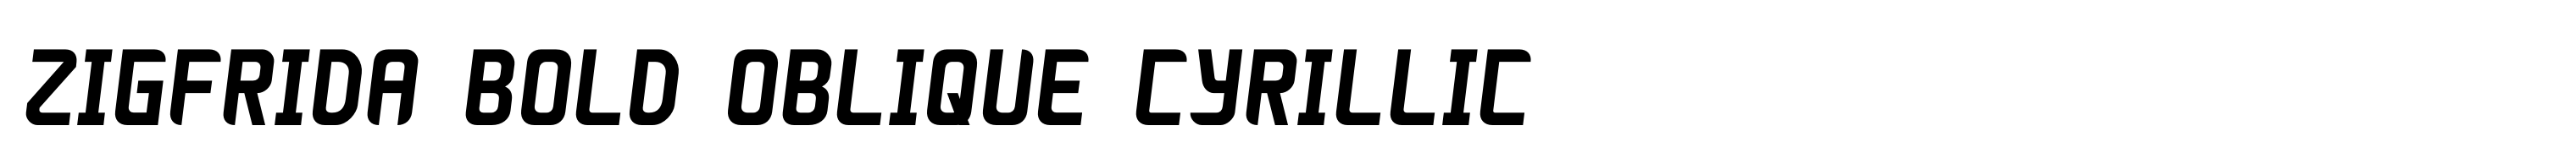 Zigfrida Bold Oblique Cyrillic